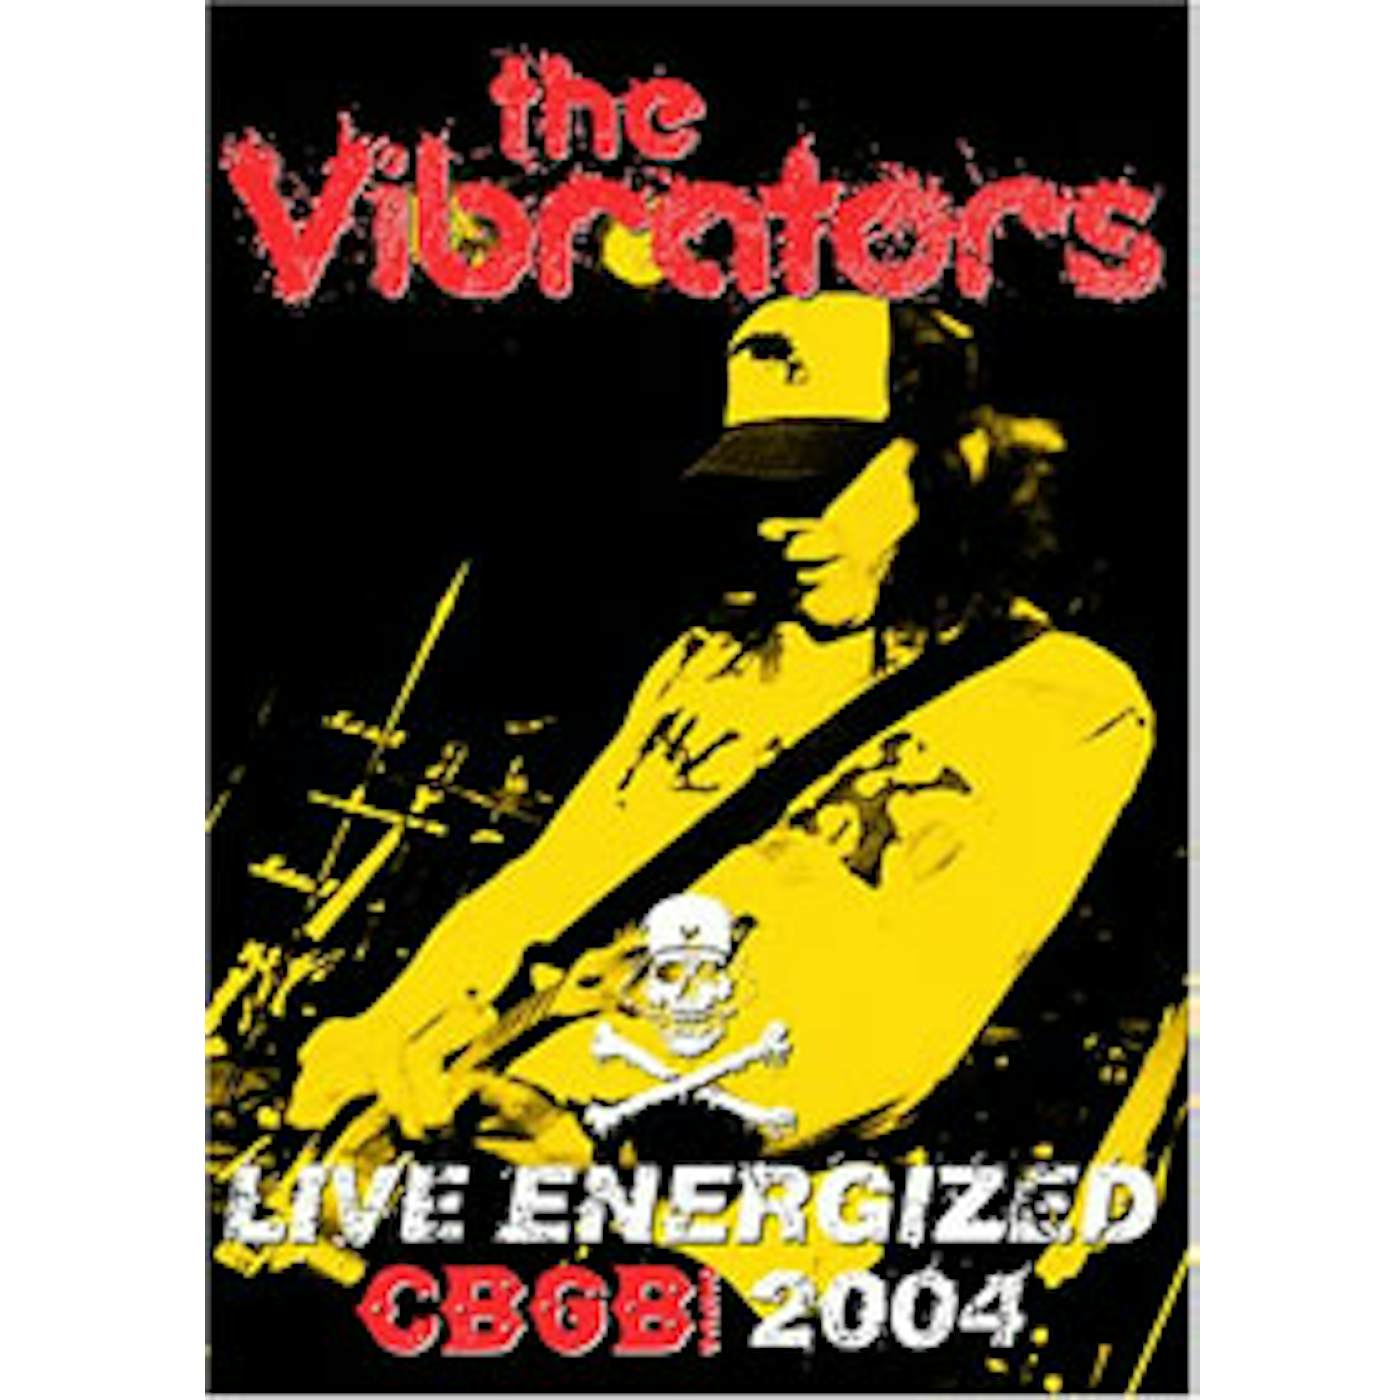 The Vibrators DVD - Live, Energized - Cbgb'S 2004